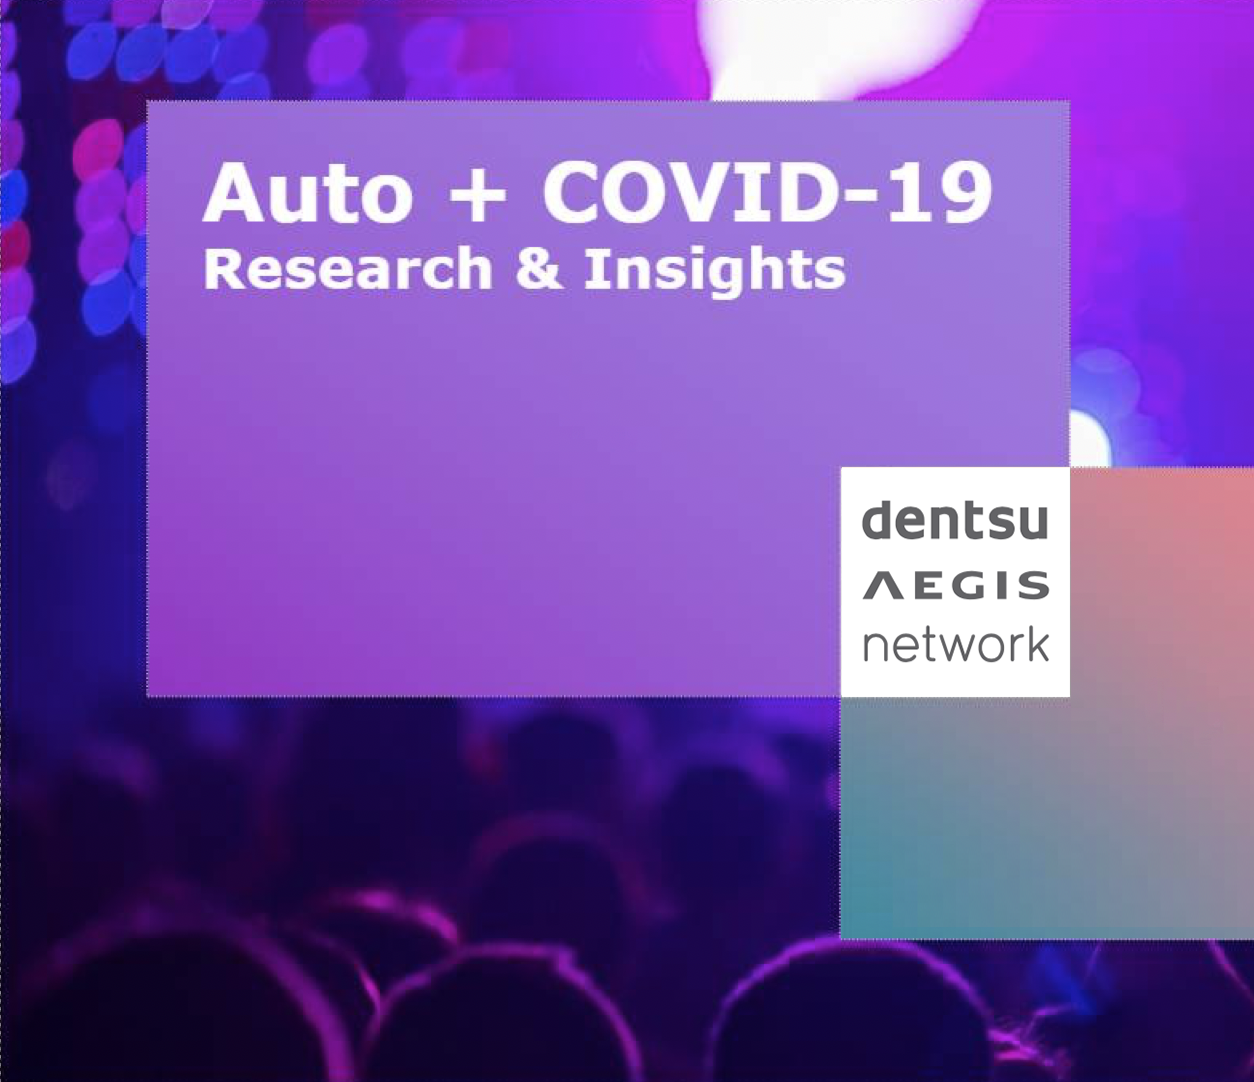 dentsu | COVID-19 and the impacts on auto